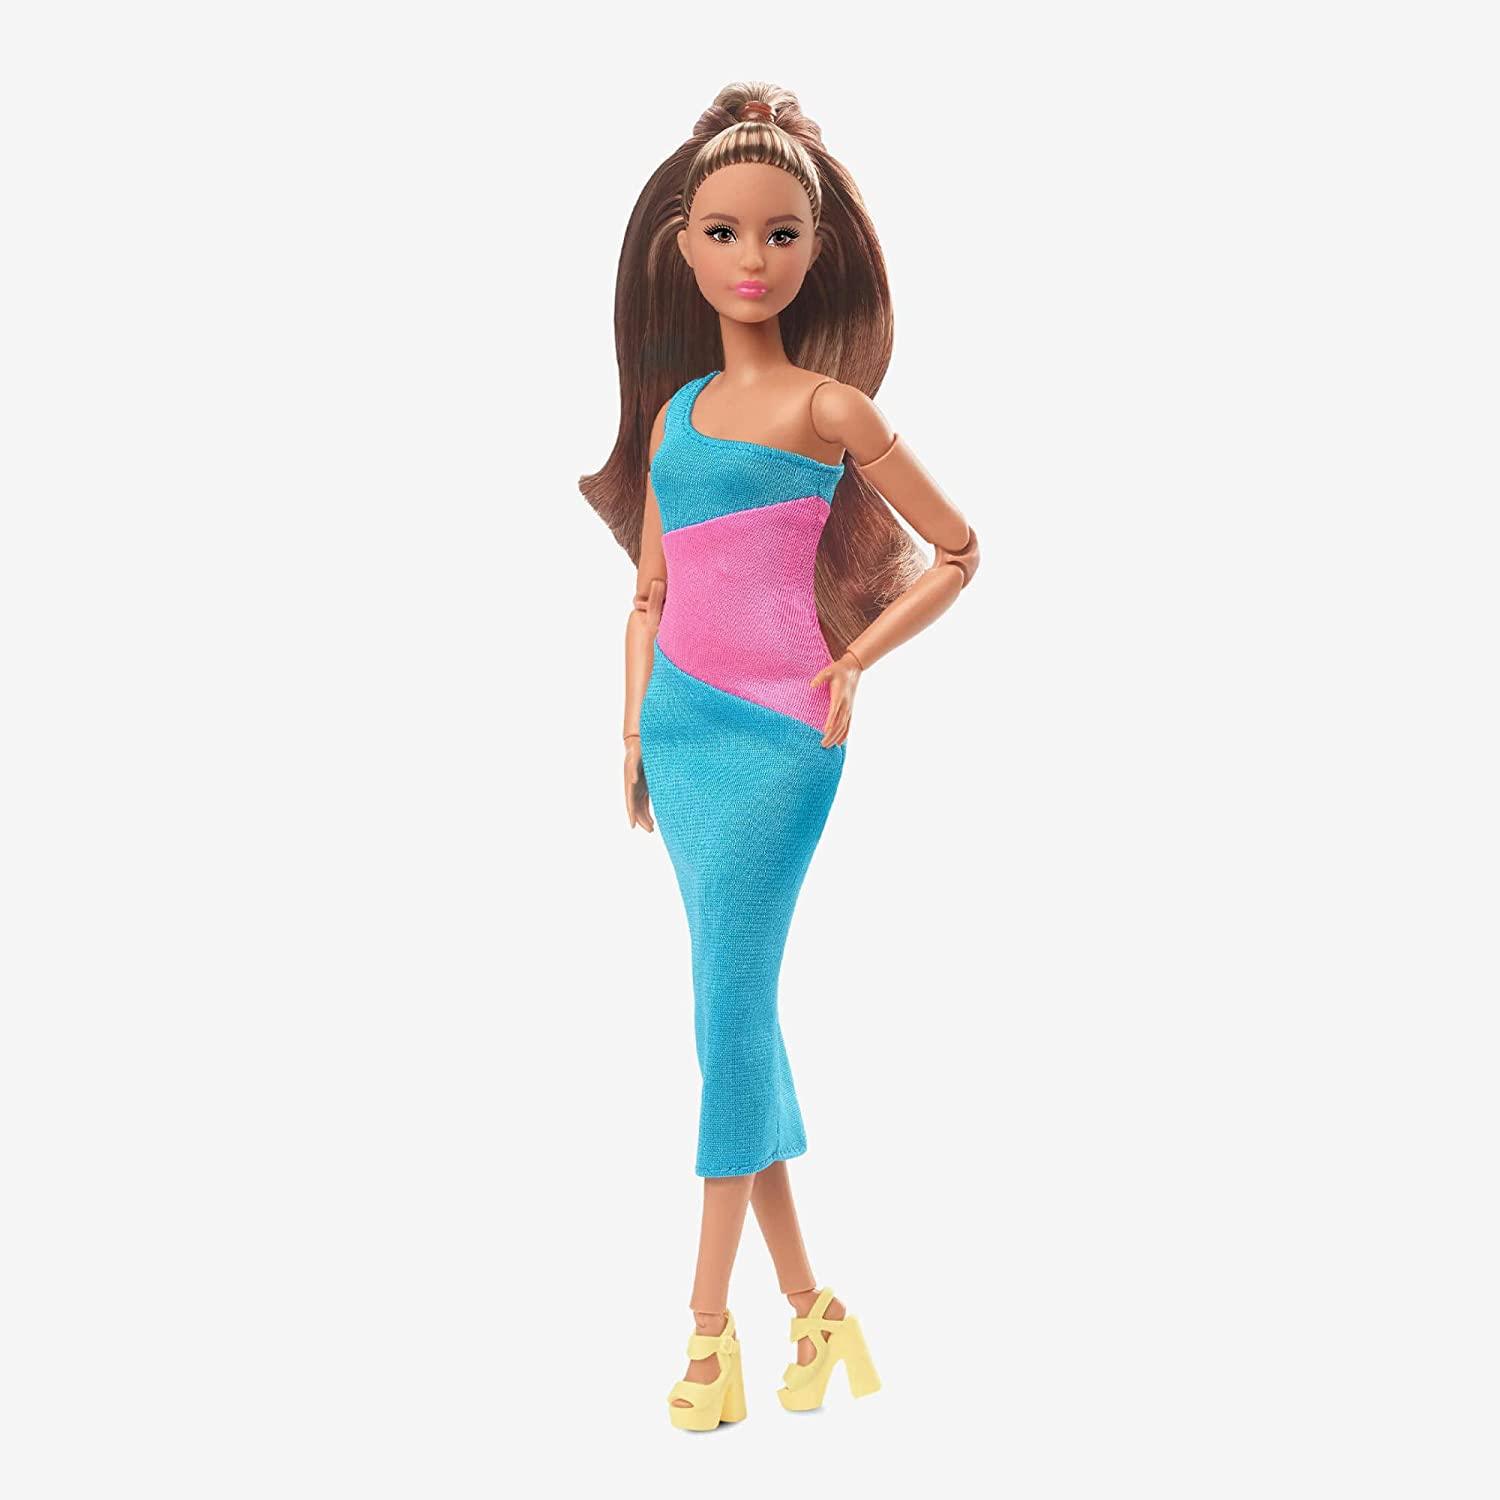 Barbie – BumbleToys